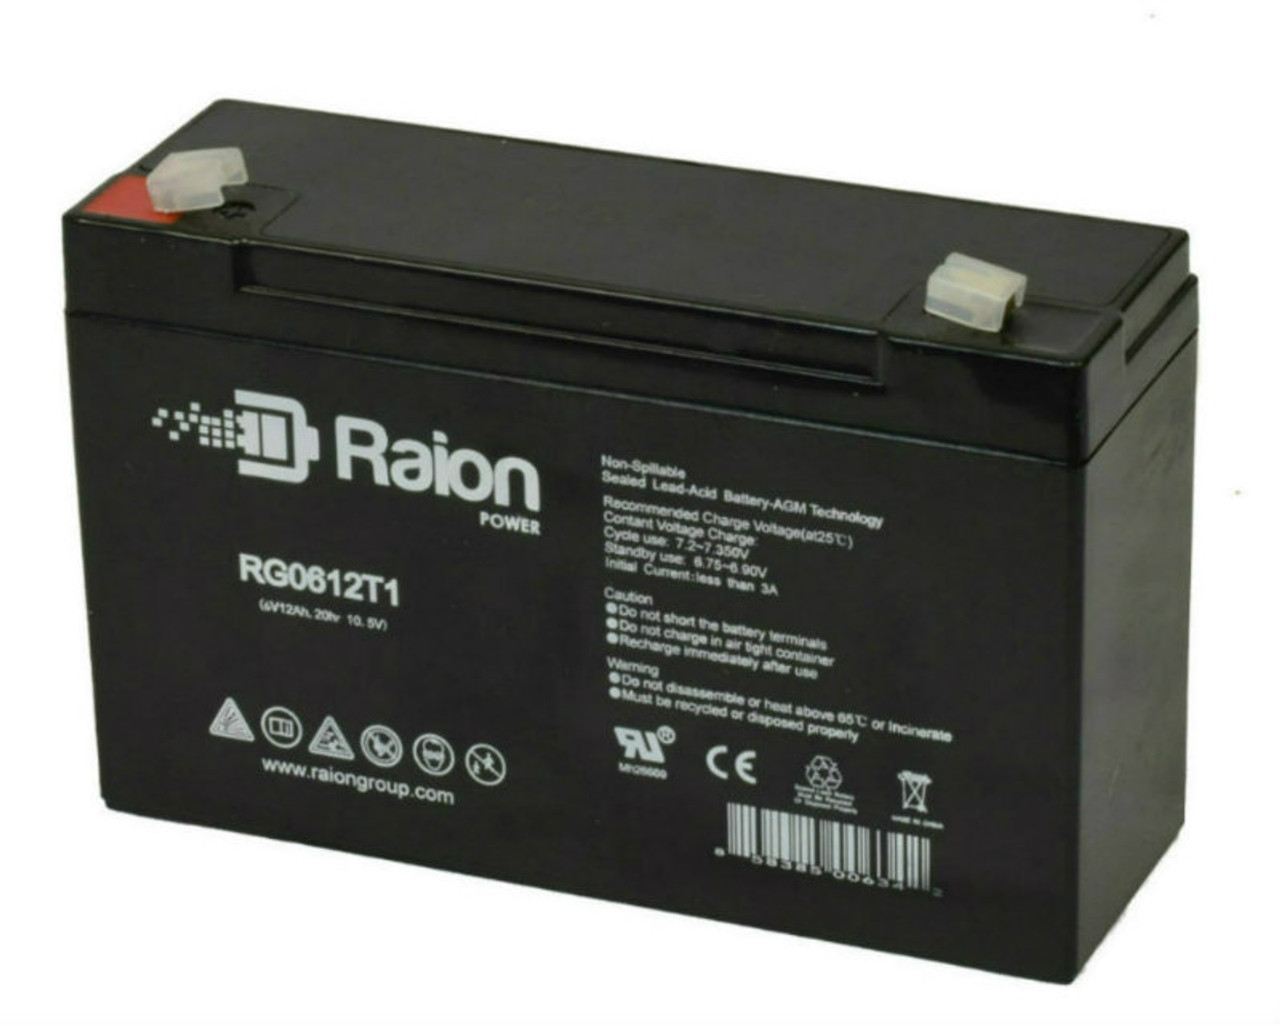 Raion Power RG06120T1 Replacement Emergency Light Battery for Elan ST2